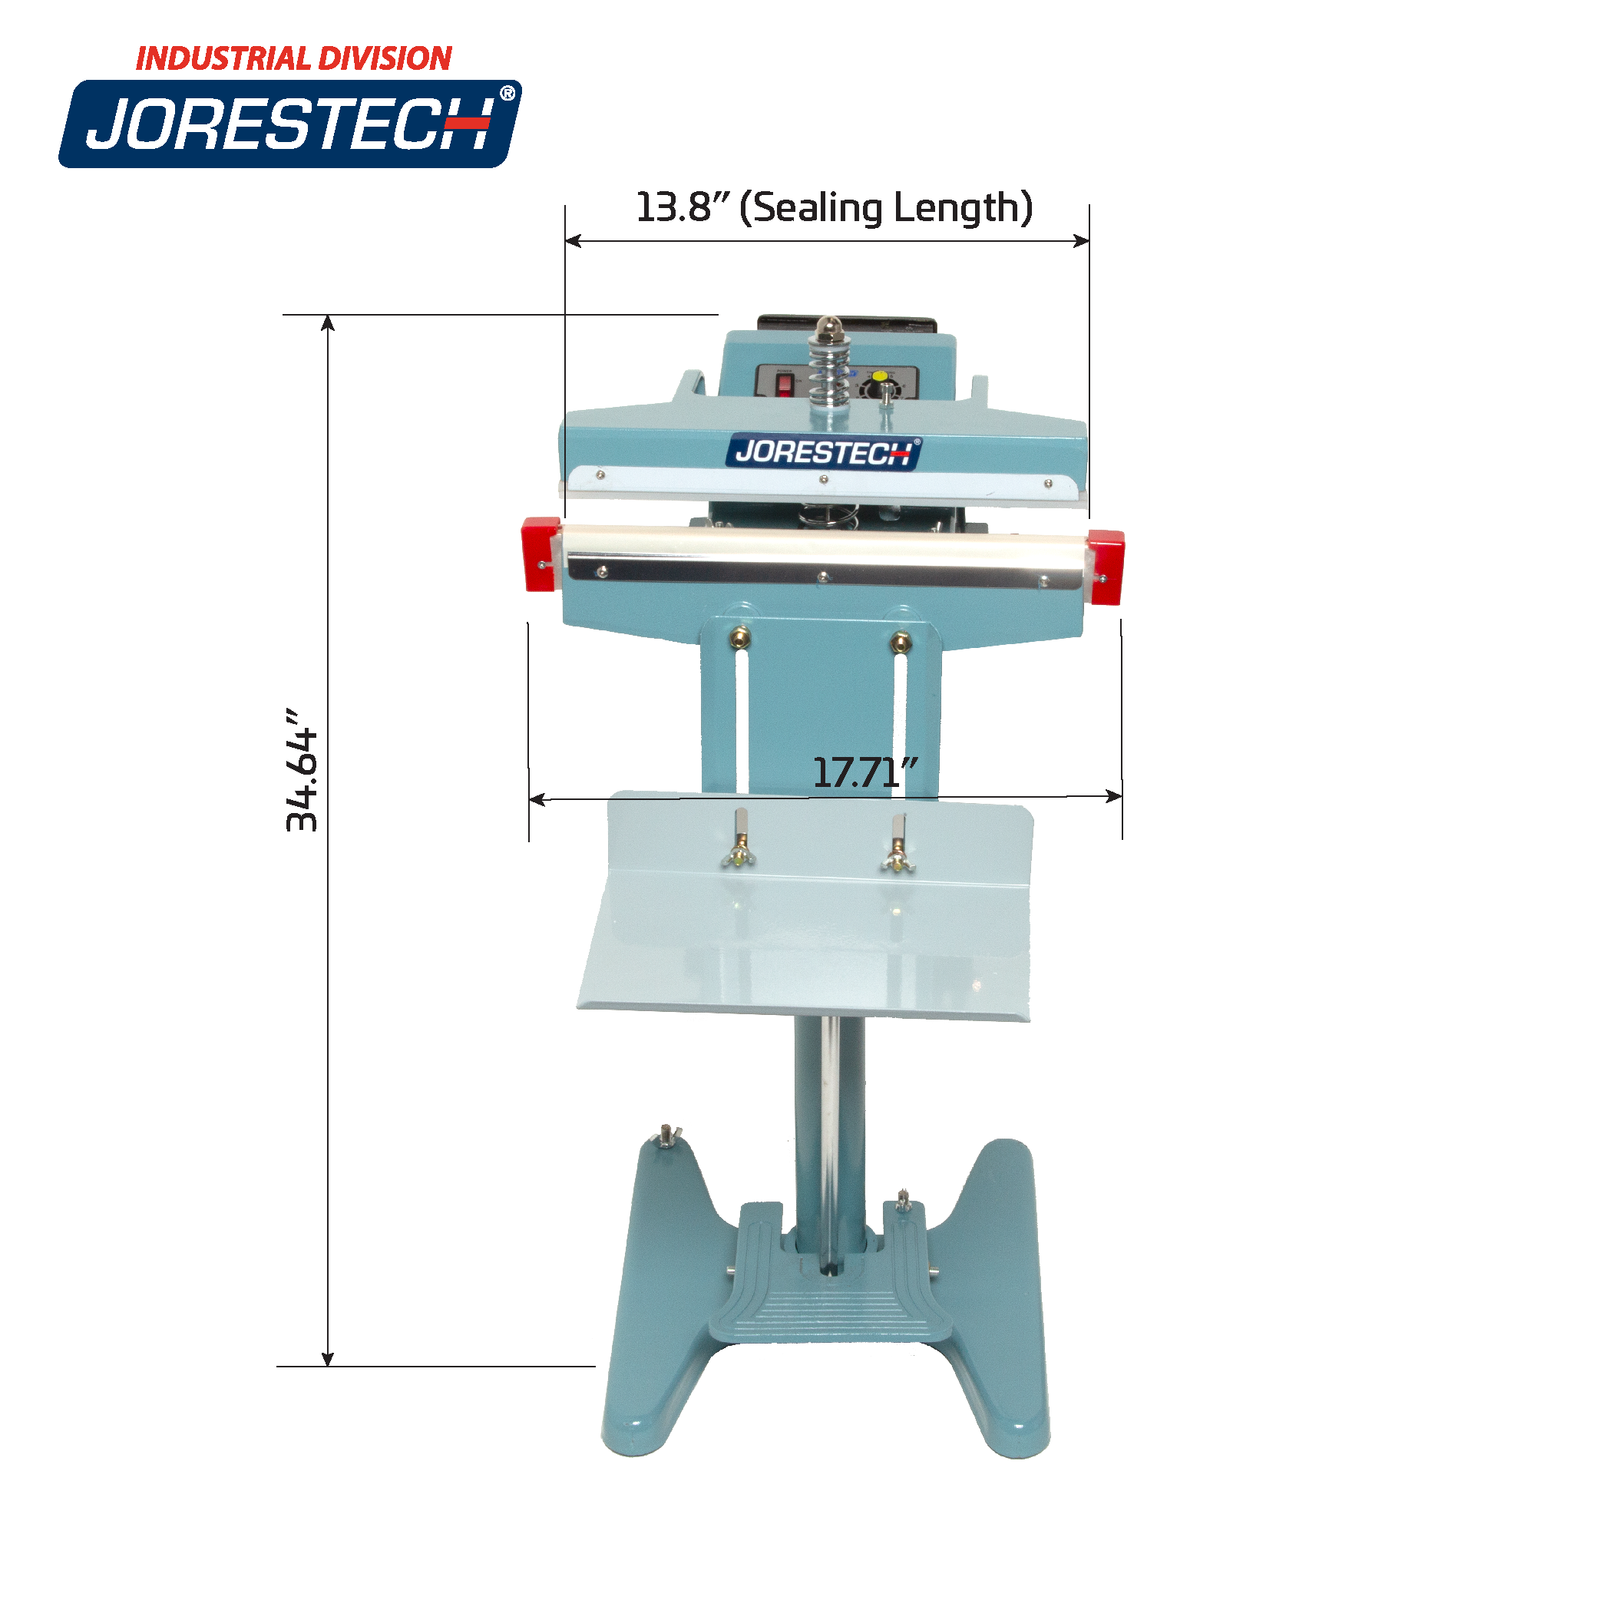 Infographic shows blue JORESTECH foot impulse sealer with machine measurements. Machine measurements are 17.71